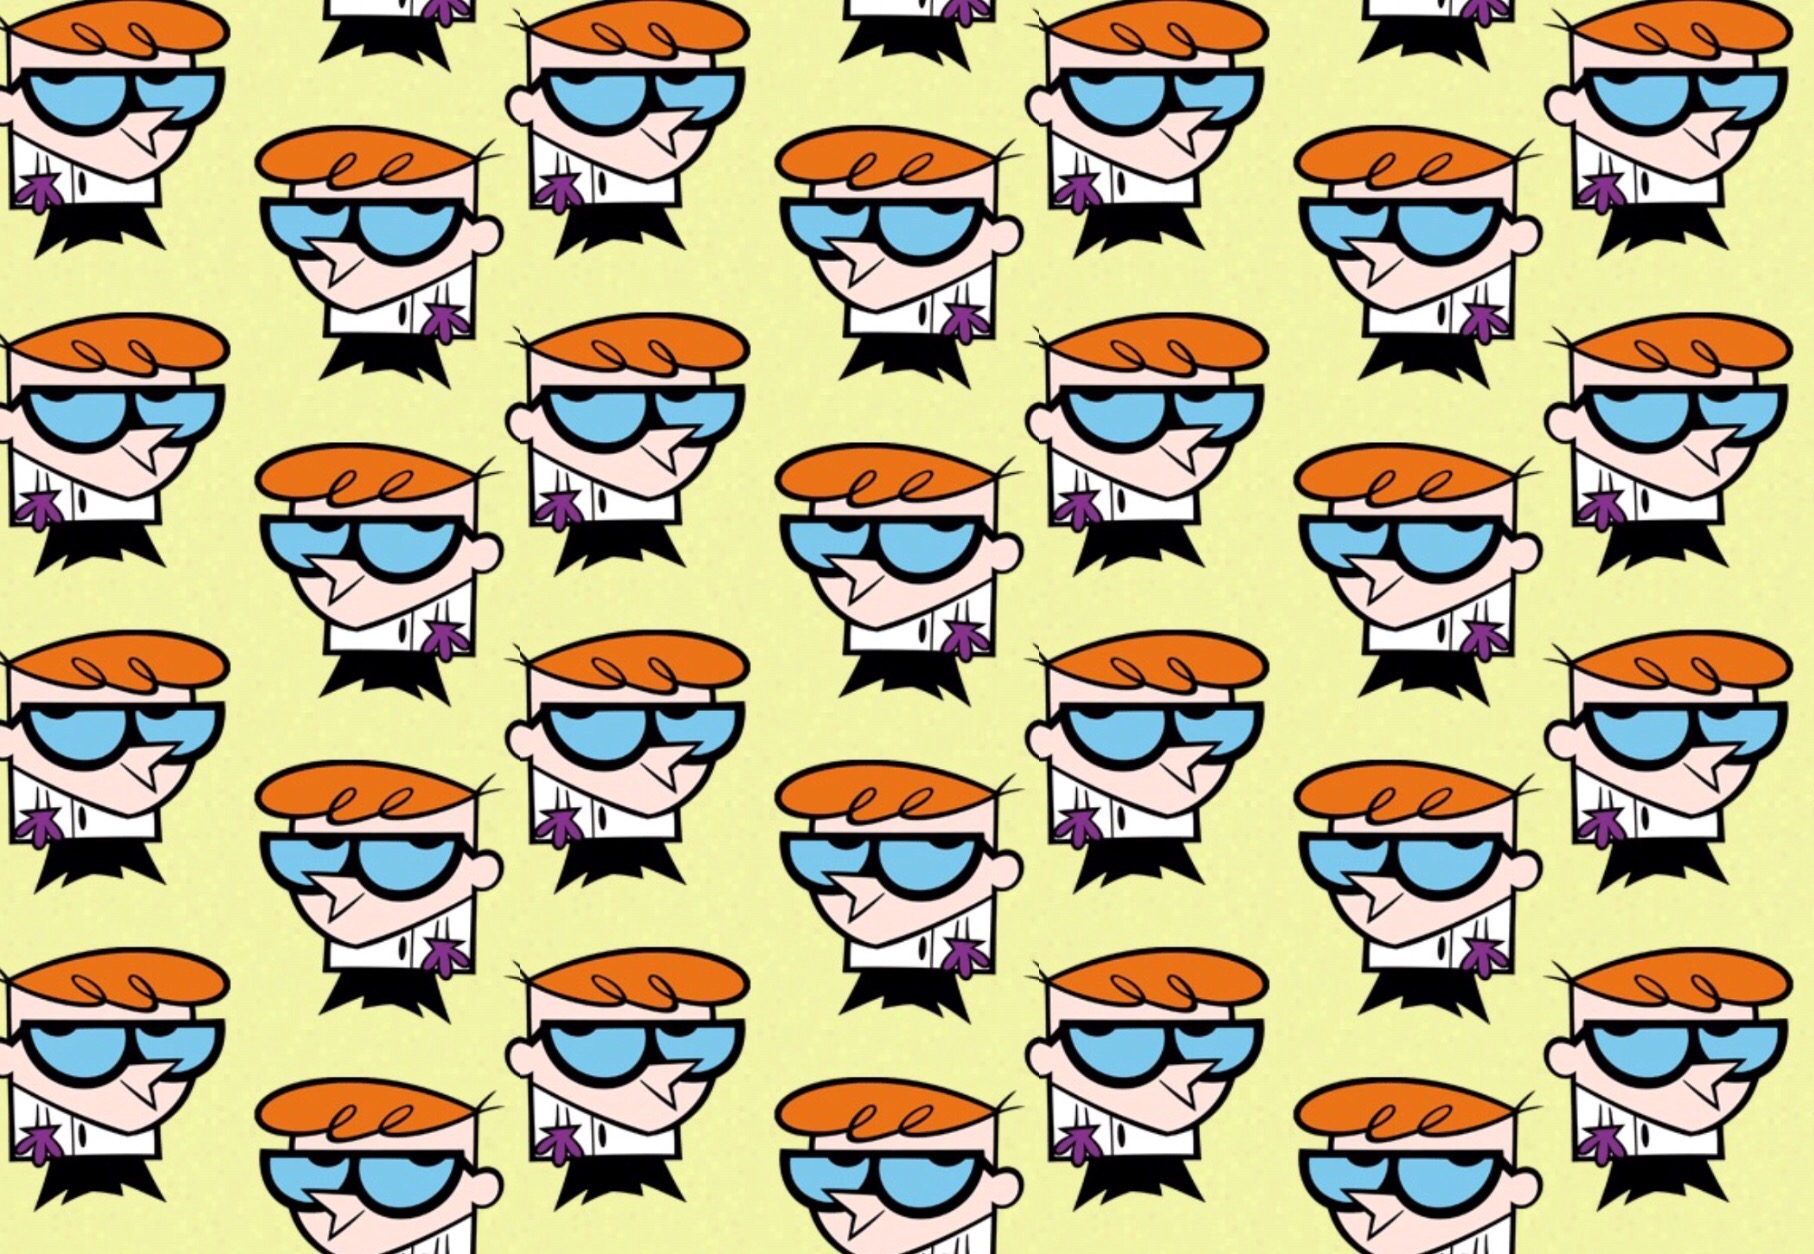 Dexter S Laboratory Wallpaper Patterns Background